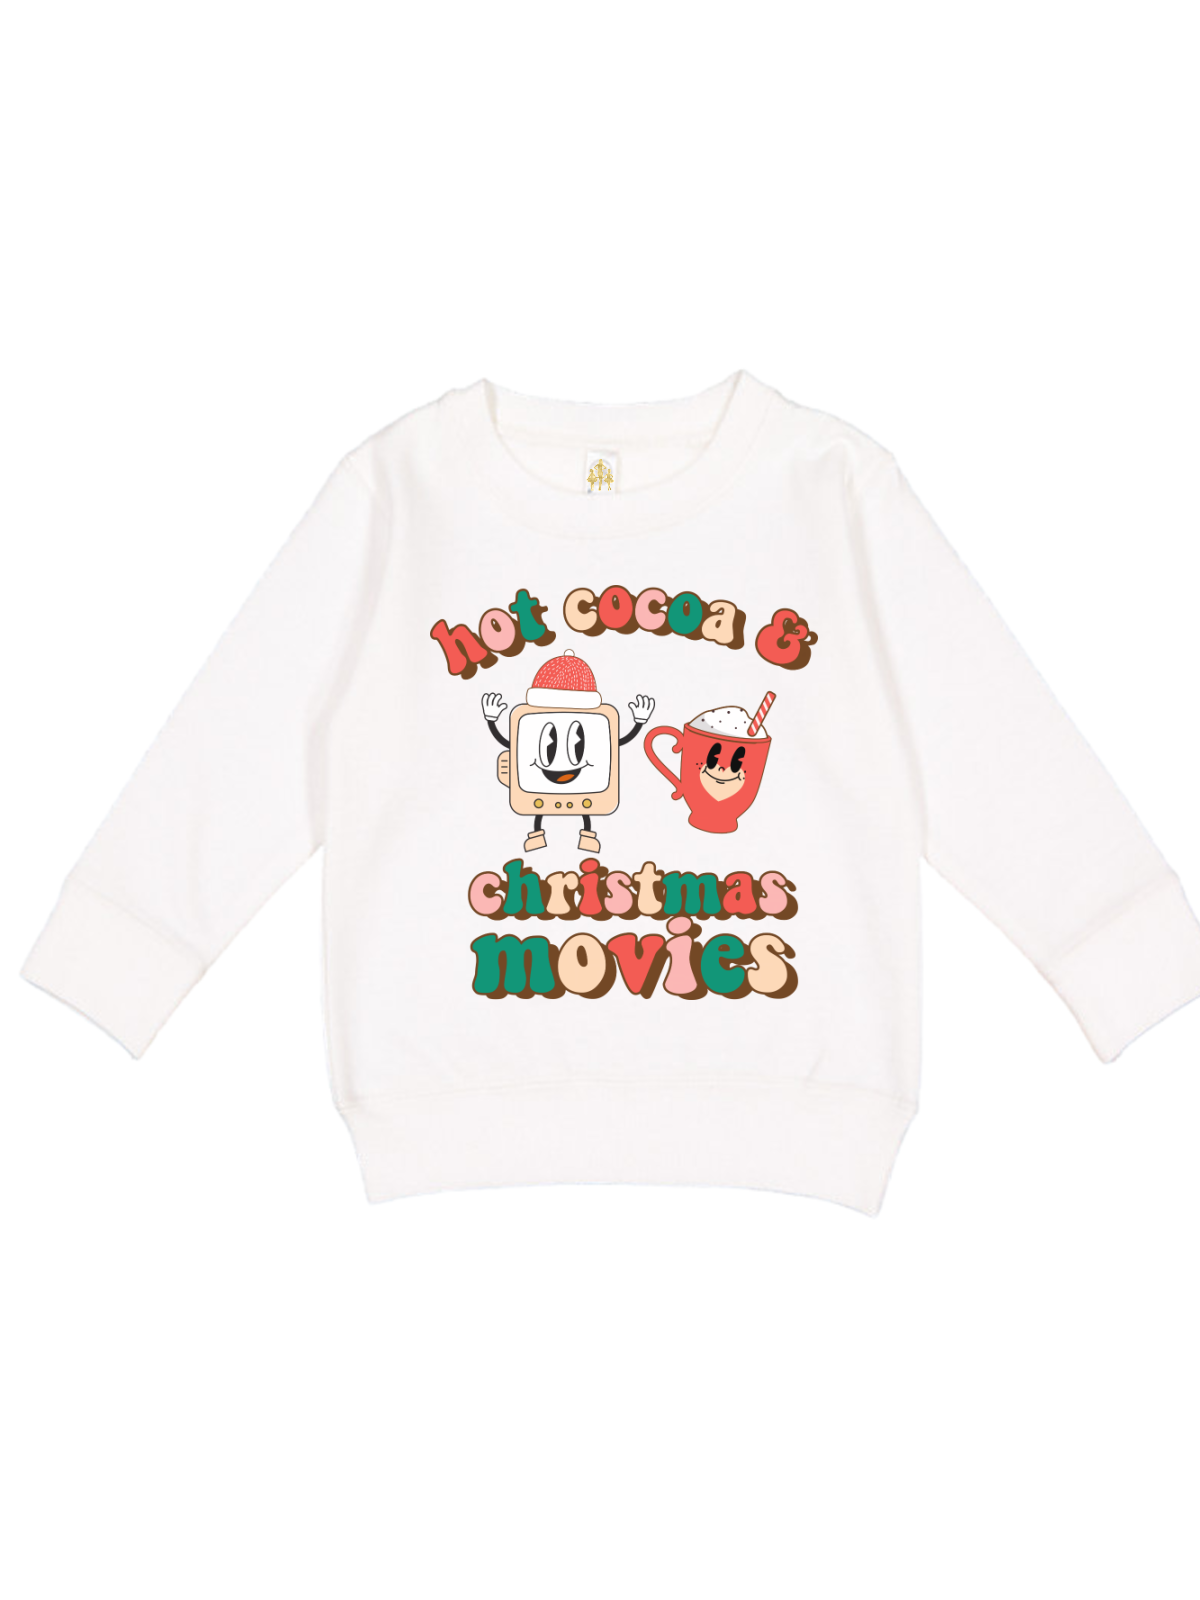 Hot Cocoa and Christmas Movies Kids Sweatshirt